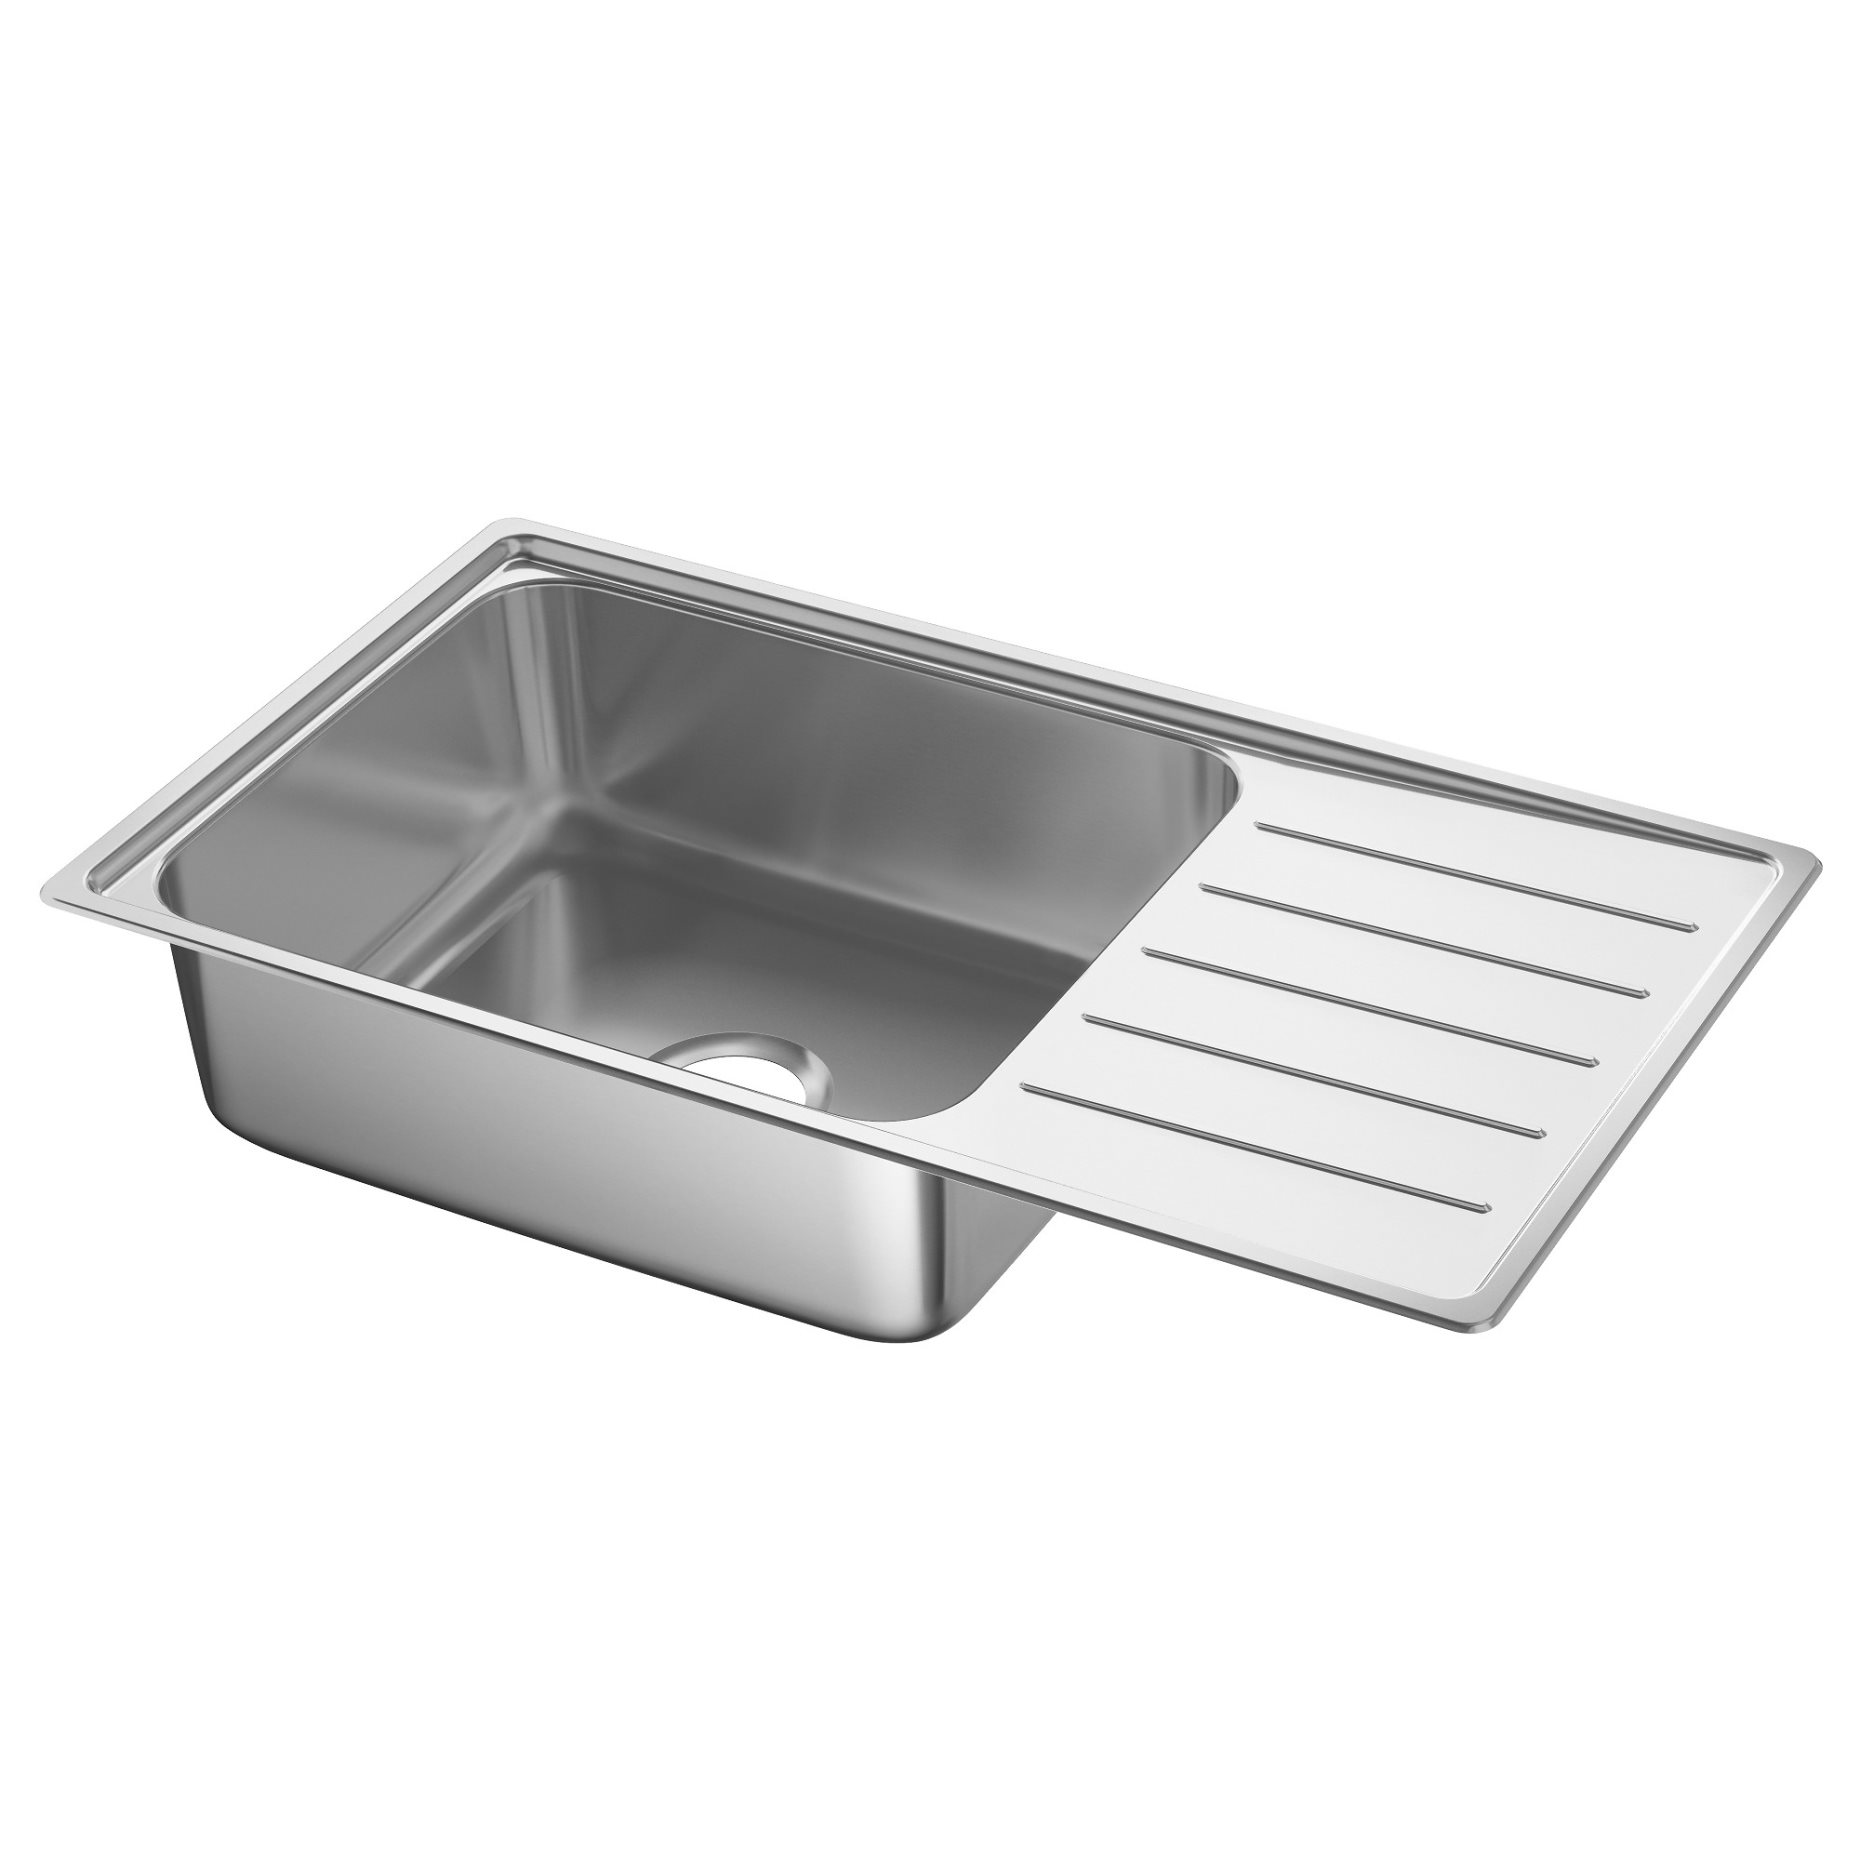 VATTUDALEN, inset sink, 1 bowl with drainboard, 903.151.71